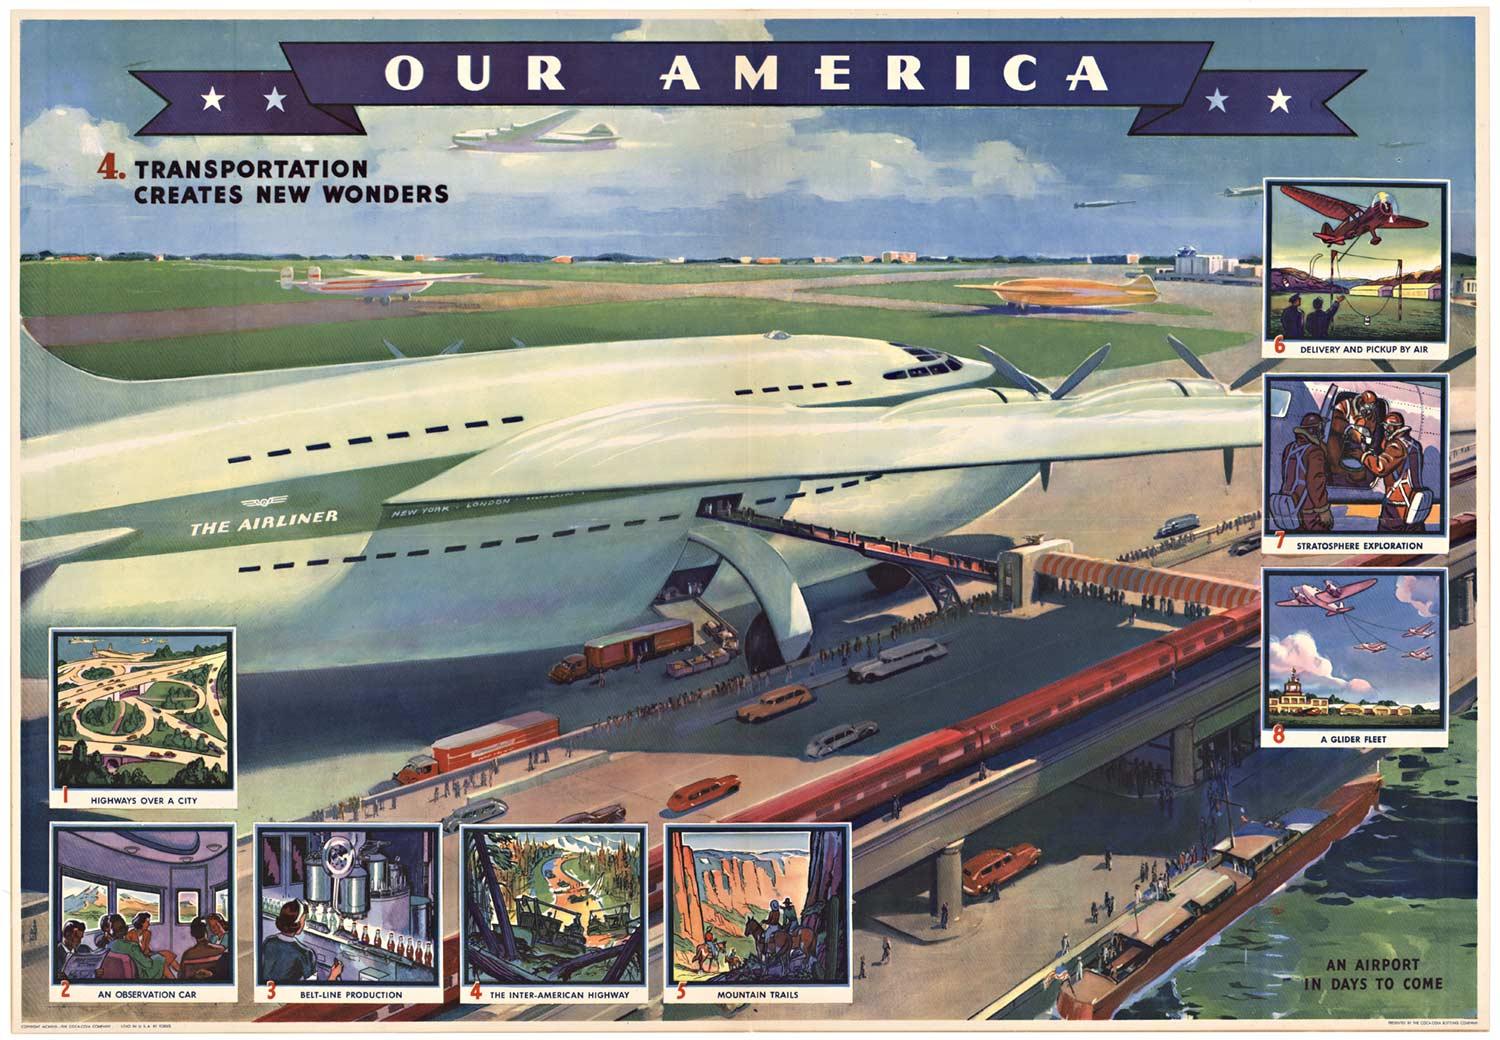 Unknown Landscape Print - Original "Our America, Transportation Creates New Wonders" 1943 vintage poster